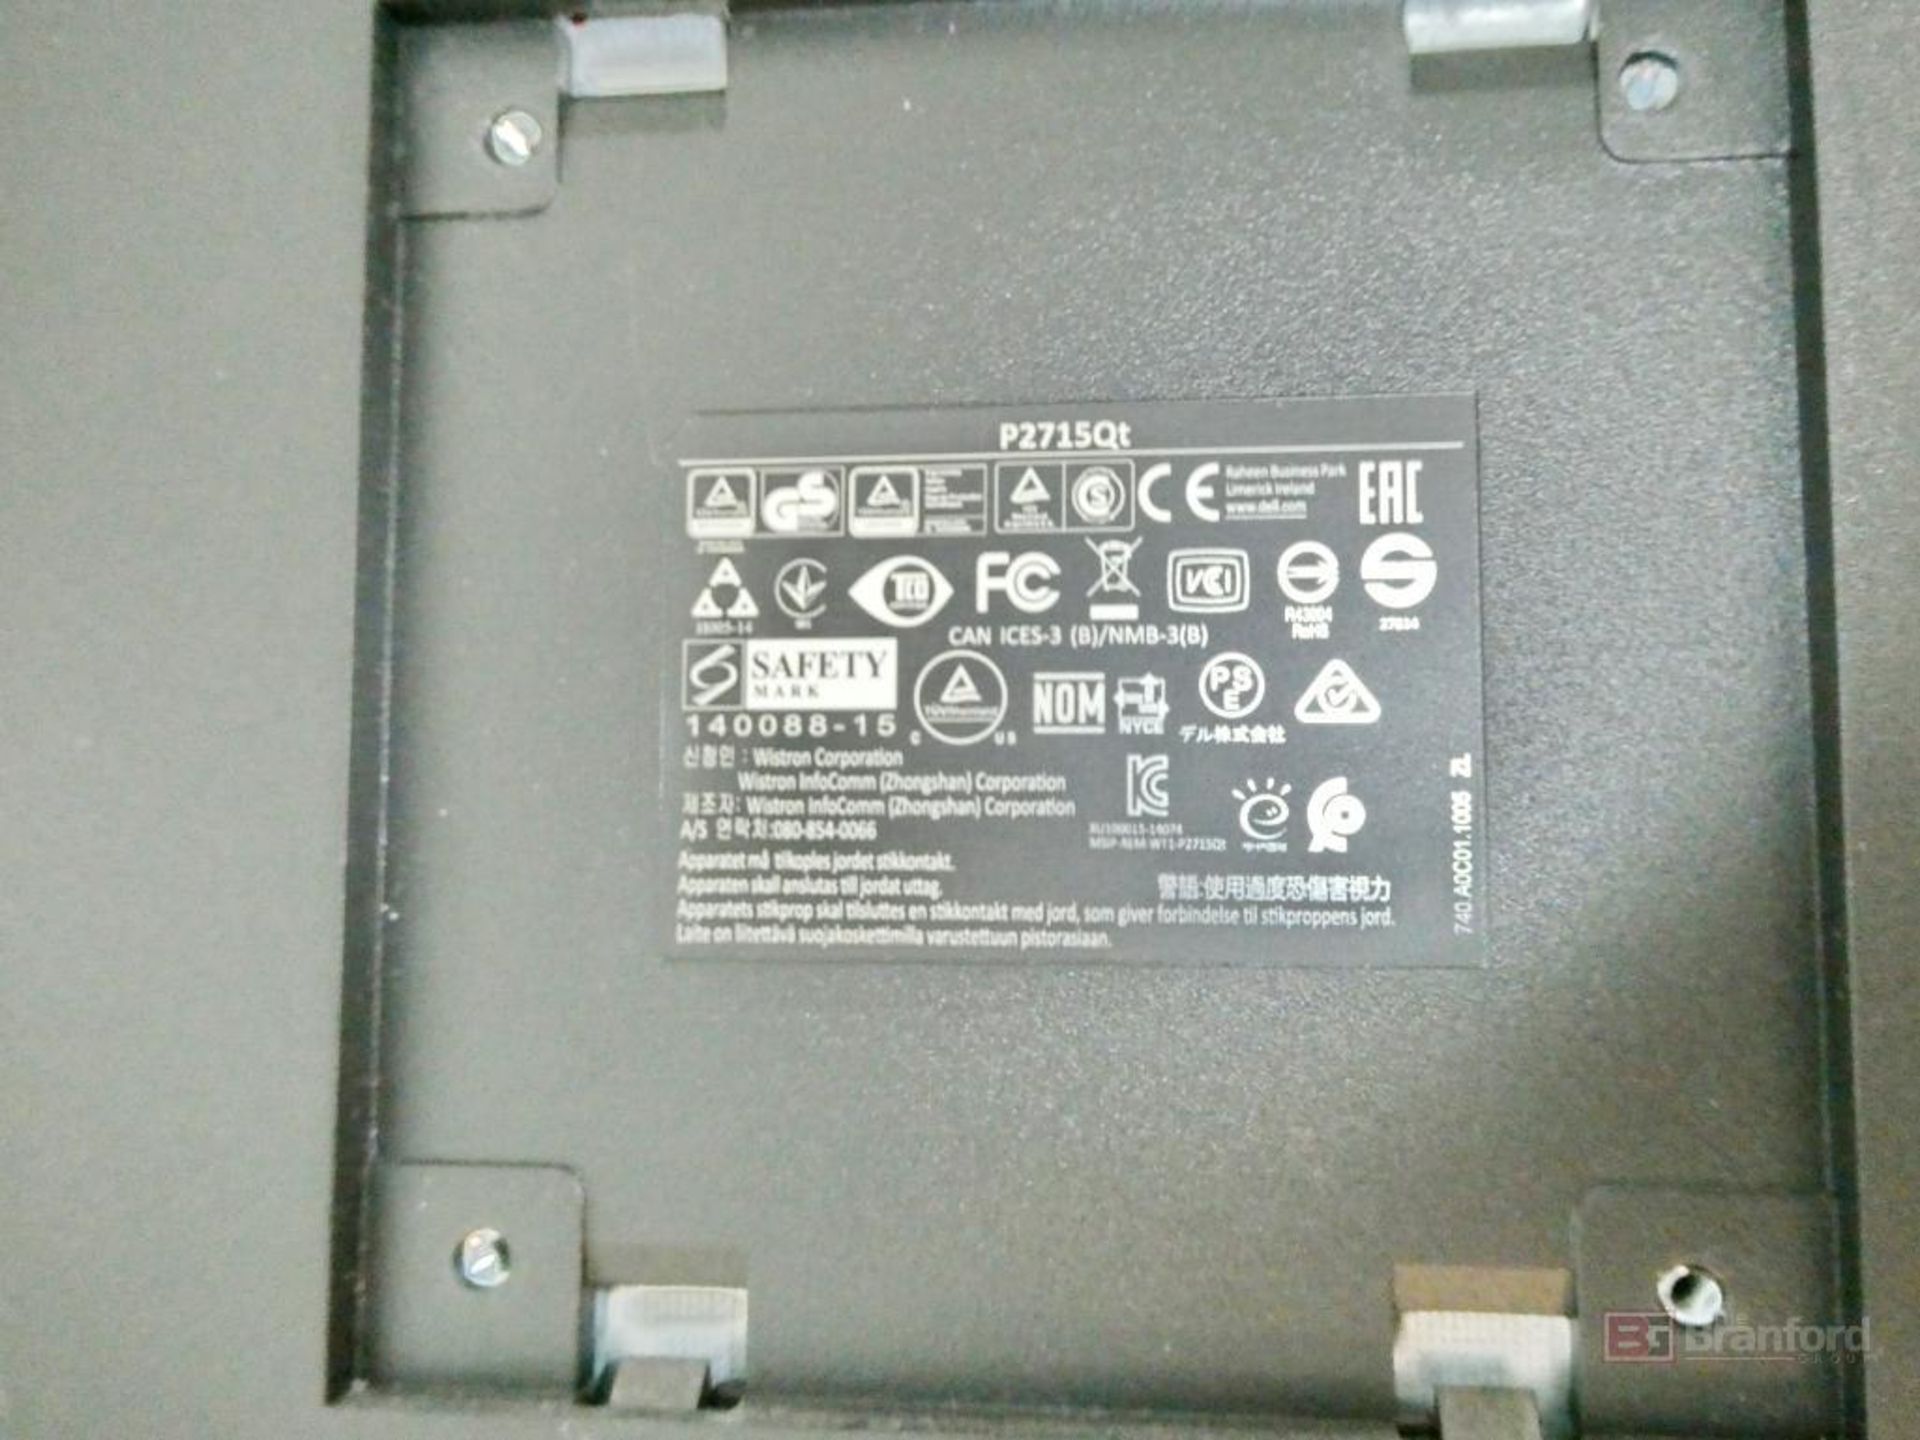 (3) Dell P2715Qt, 27" LED Monitors; (4) Stands - Image 2 of 2